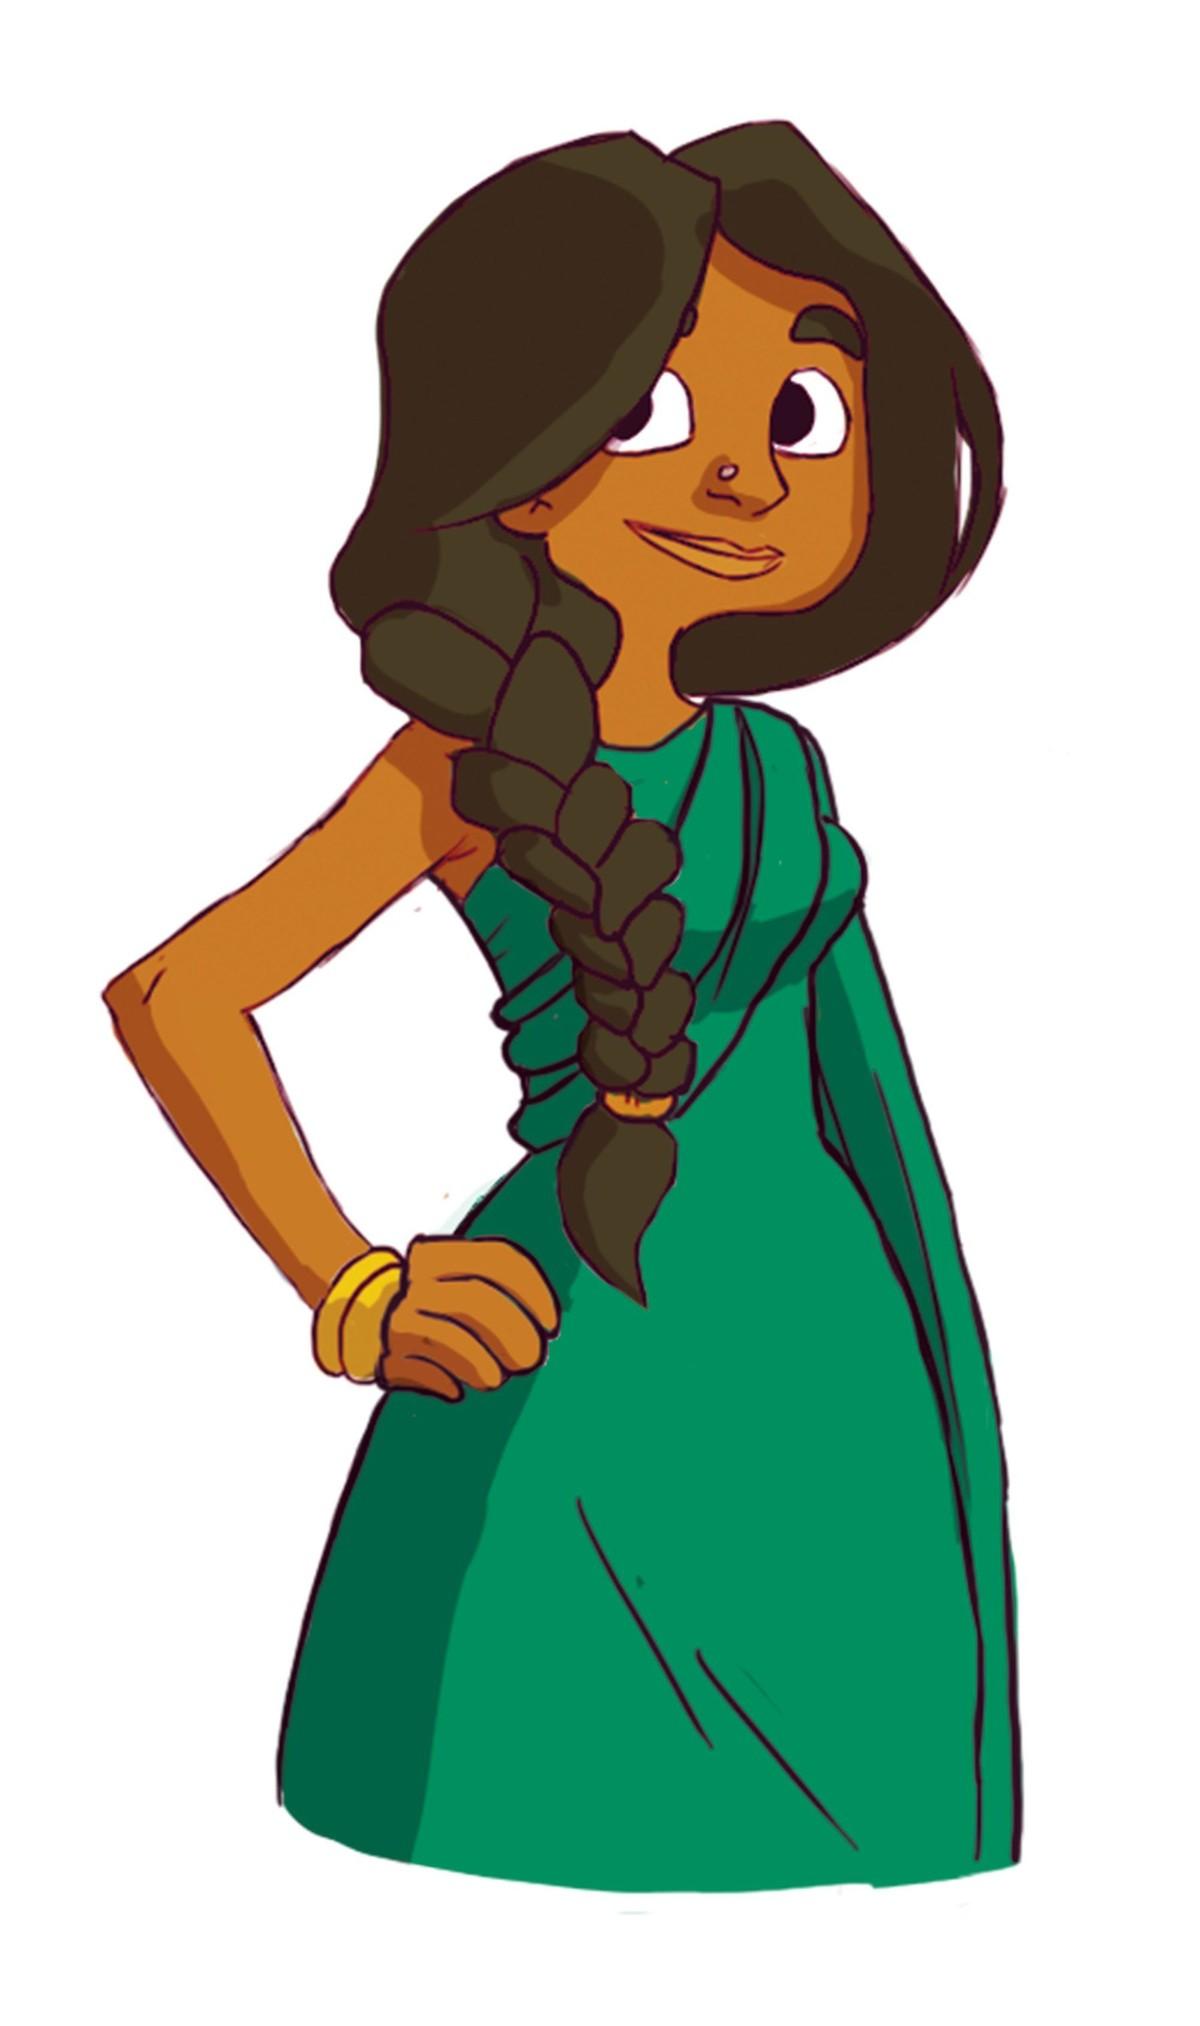 Jeune fille avec un sari vert